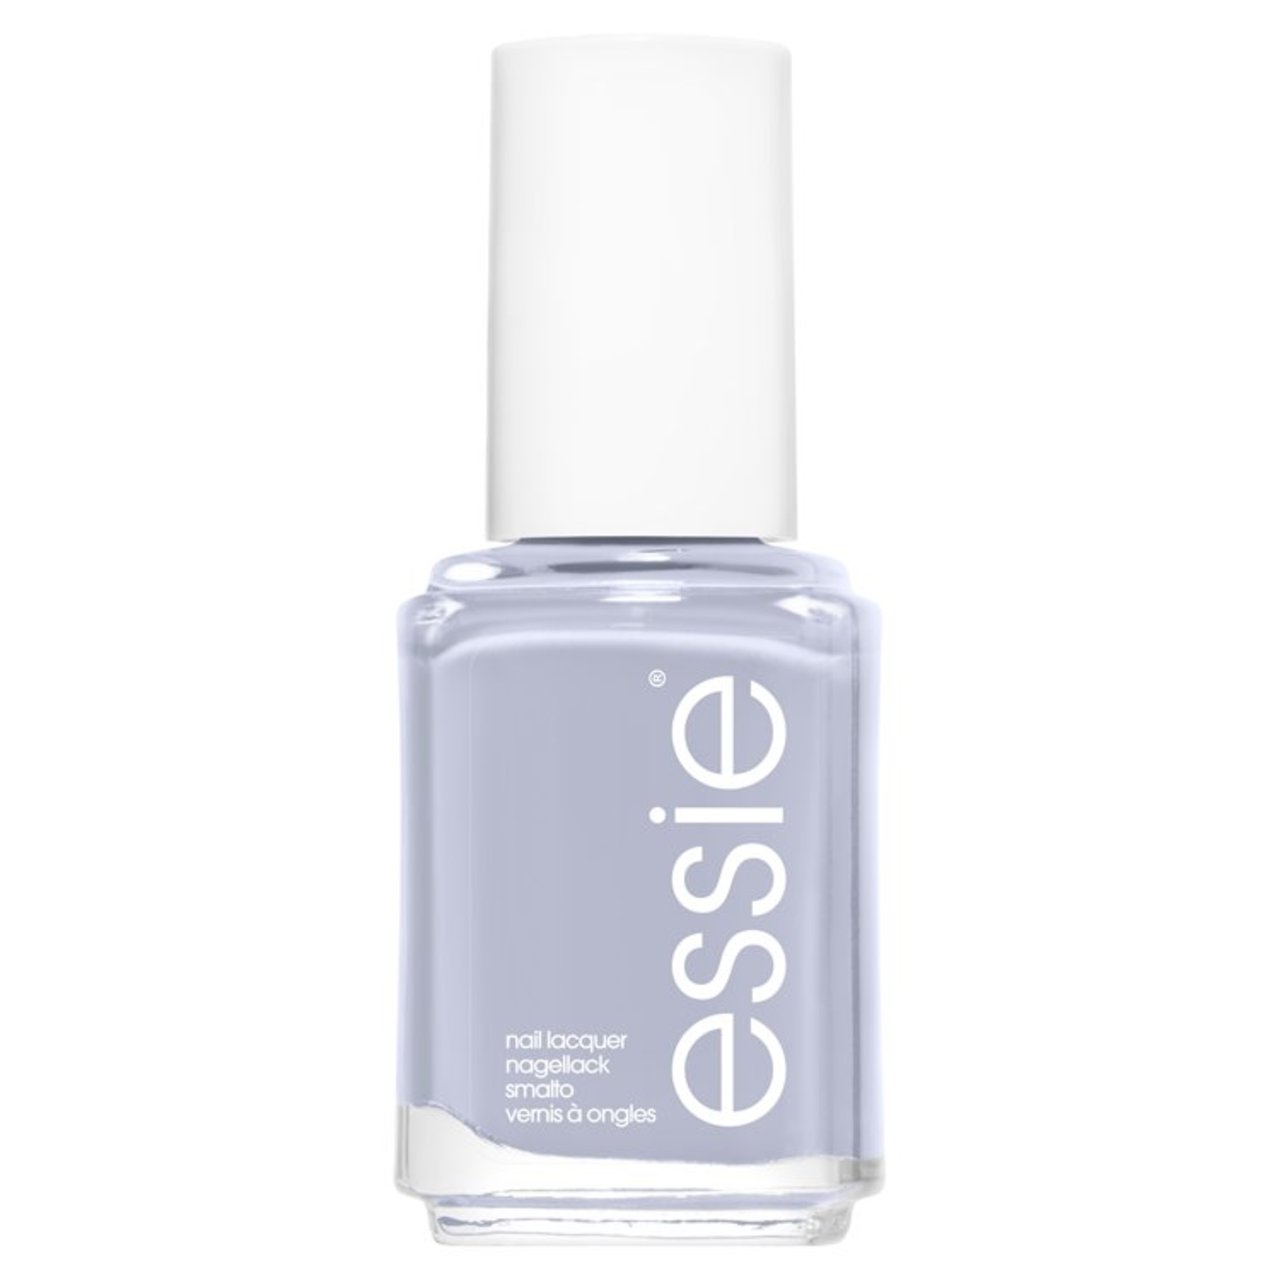 Essie Original 855 Pursuit HelloSupermarket of Lavender 13.5ml Cool Nail Polish Craftiness In - Grayish